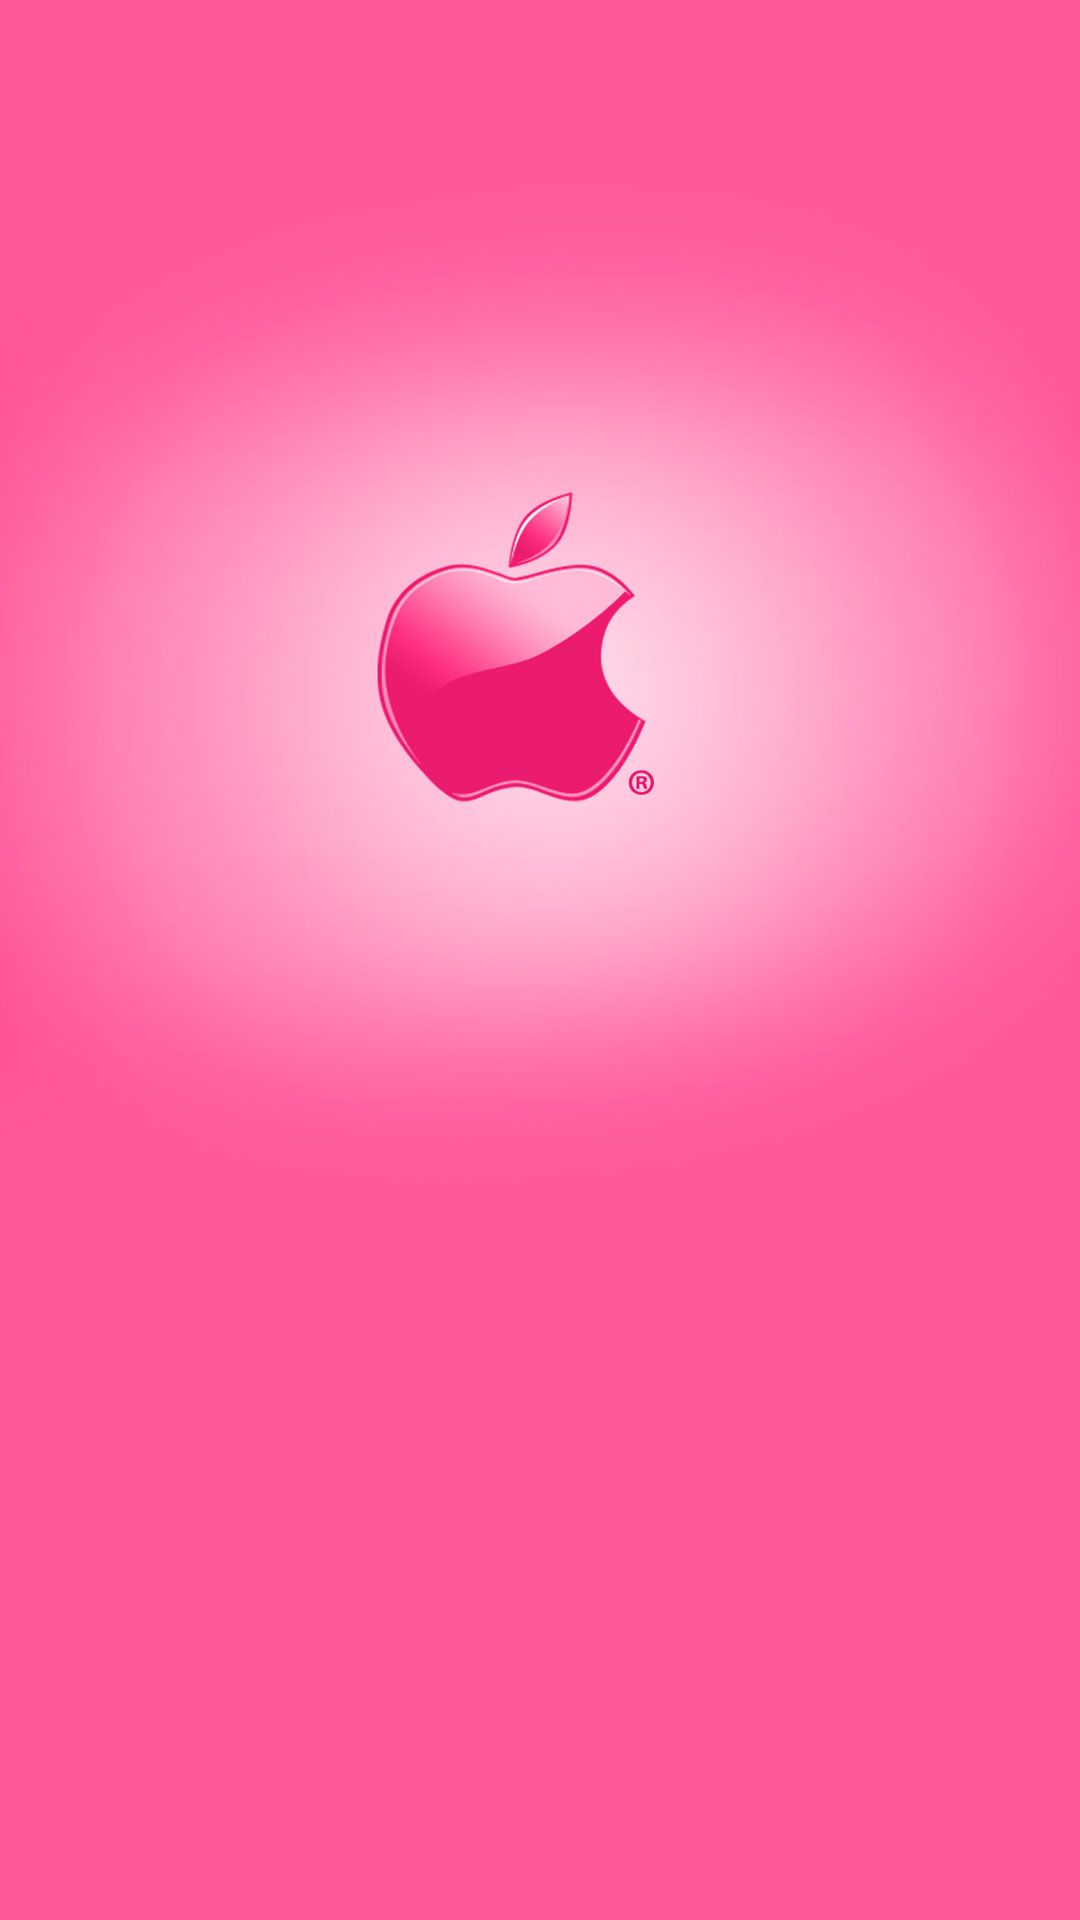 Wallpaper Weekends: In the Pink - Pink iPhone Fondos de pantalla